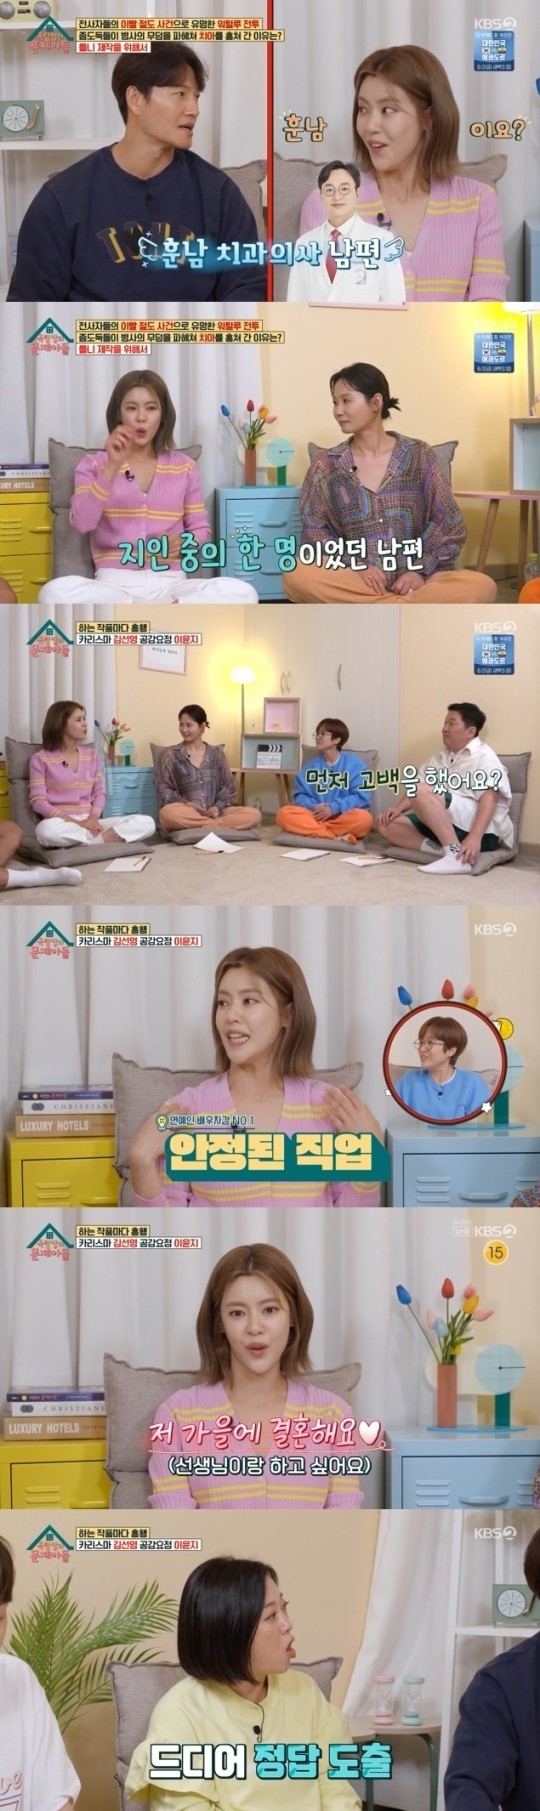 KBS 2TV 예능 프로그램 ‘옥탑방의 문제아들’